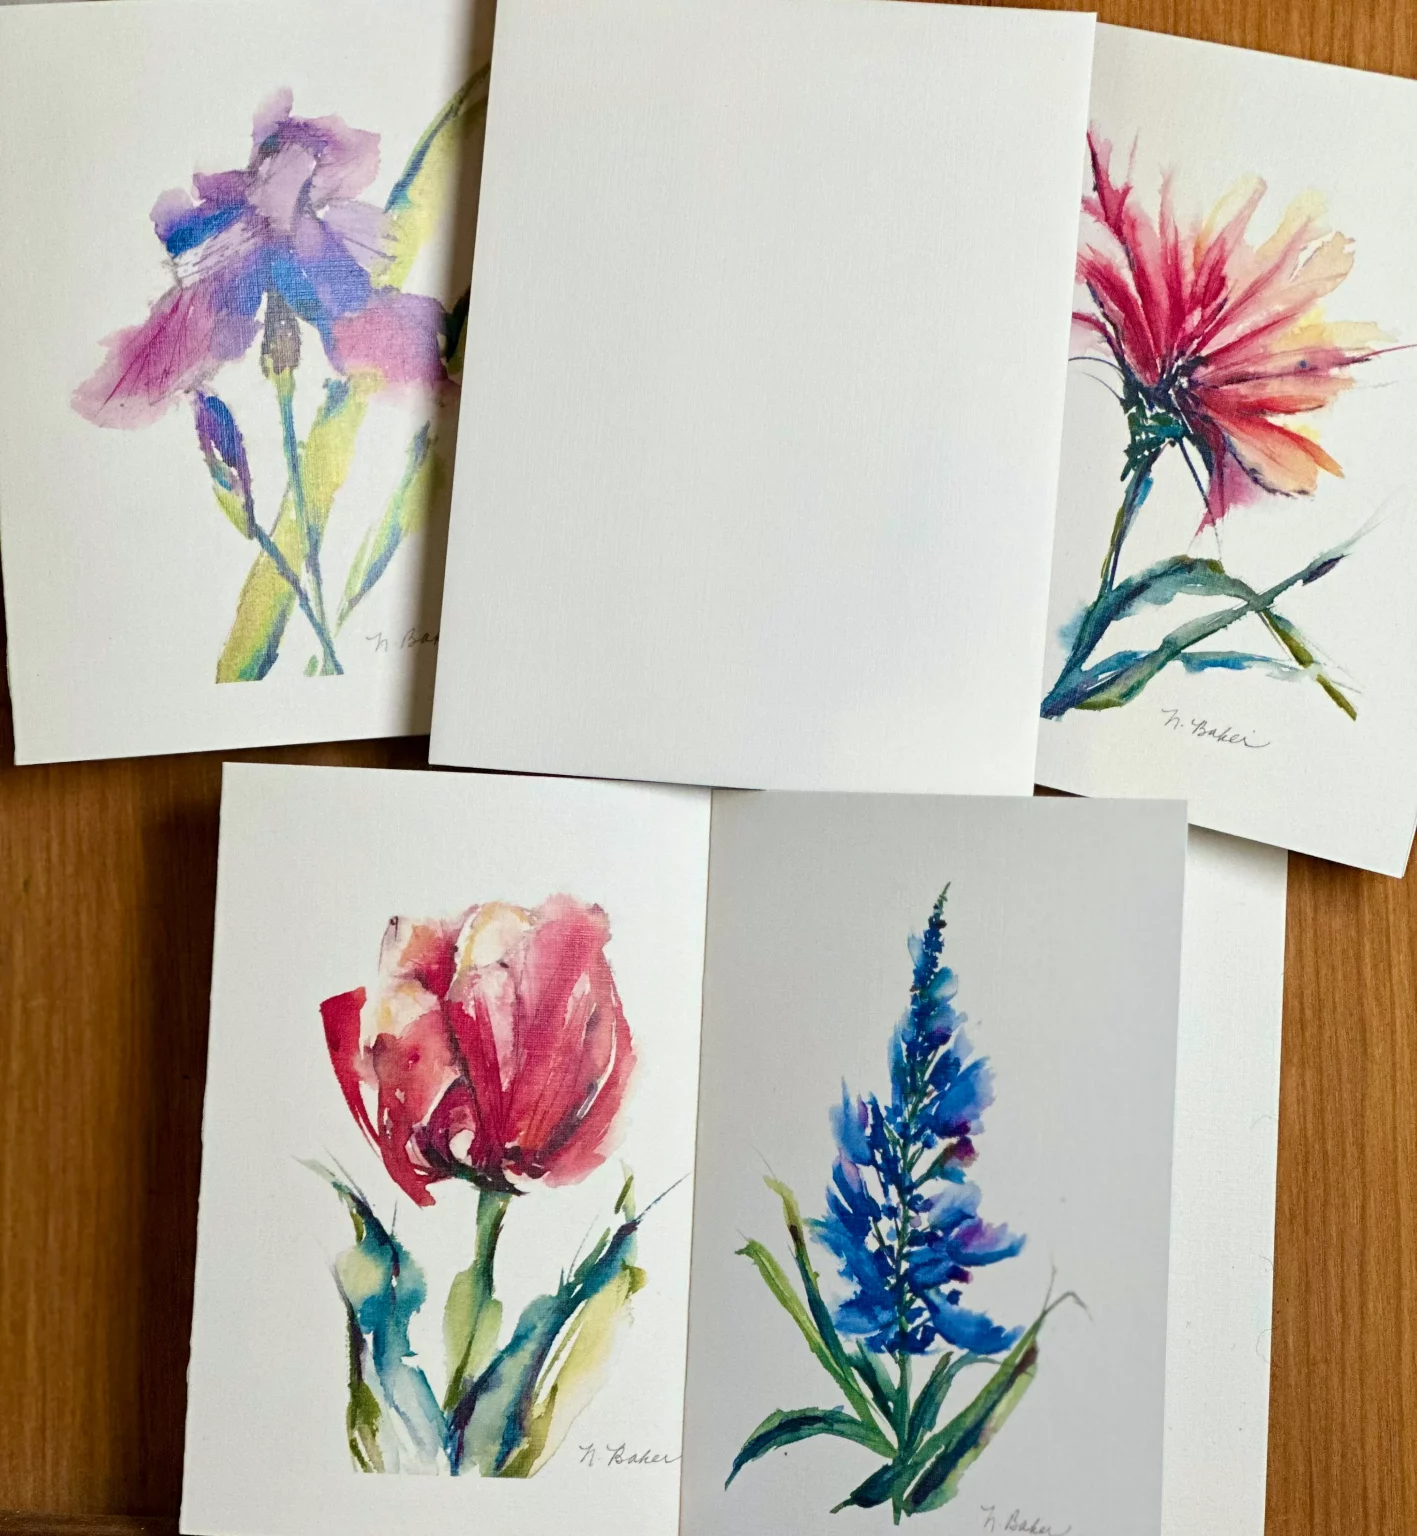 printed notecards of original watercolor painting